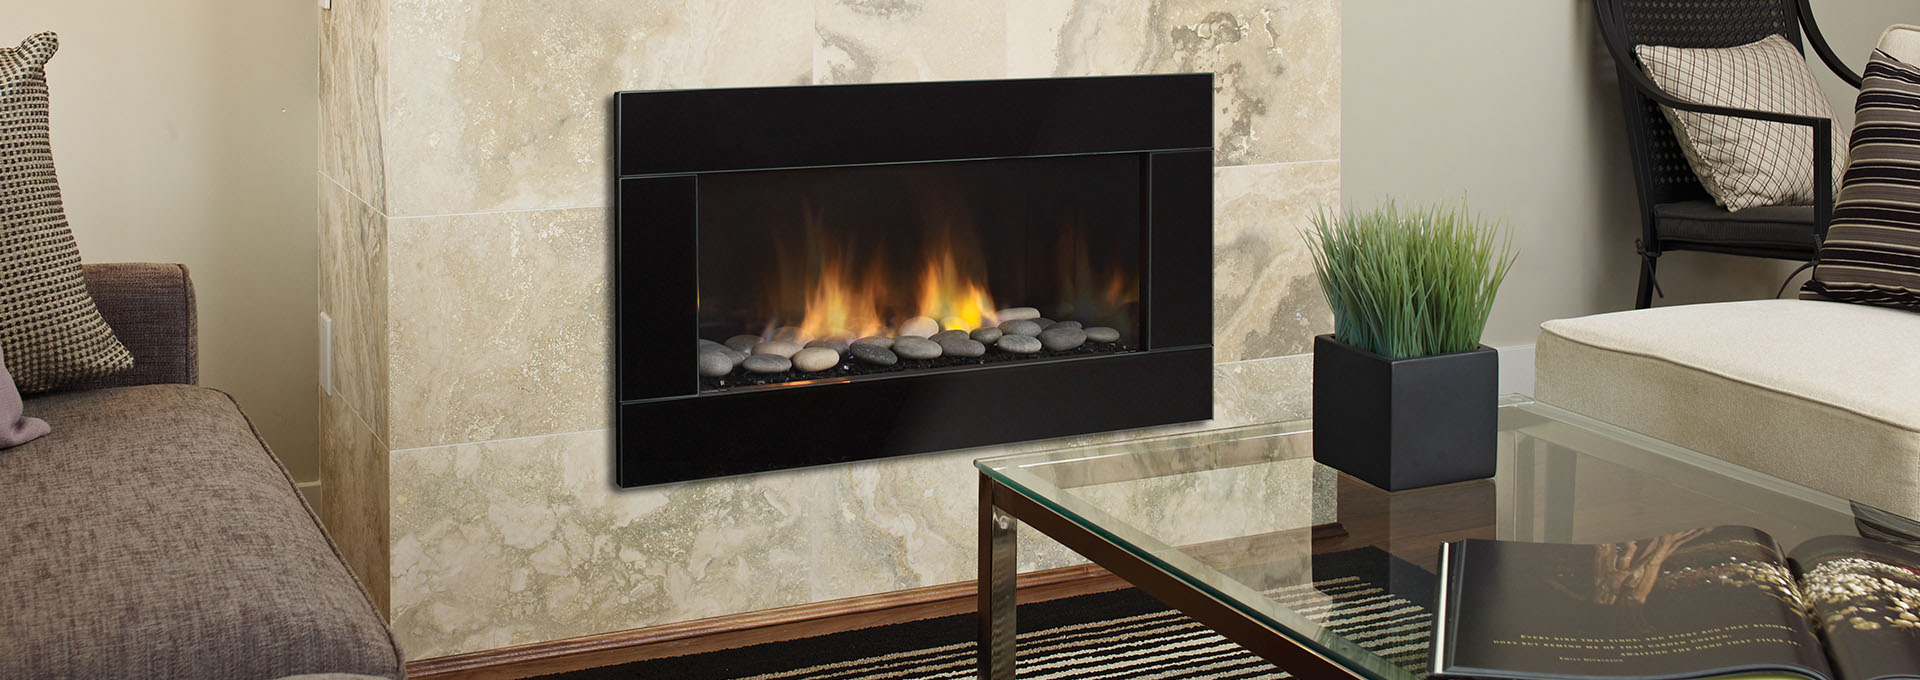 How to Arrange Fake Logs In Gas Fireplace Fresh Fireplaces toronto Fireplace Repair & Maintenance